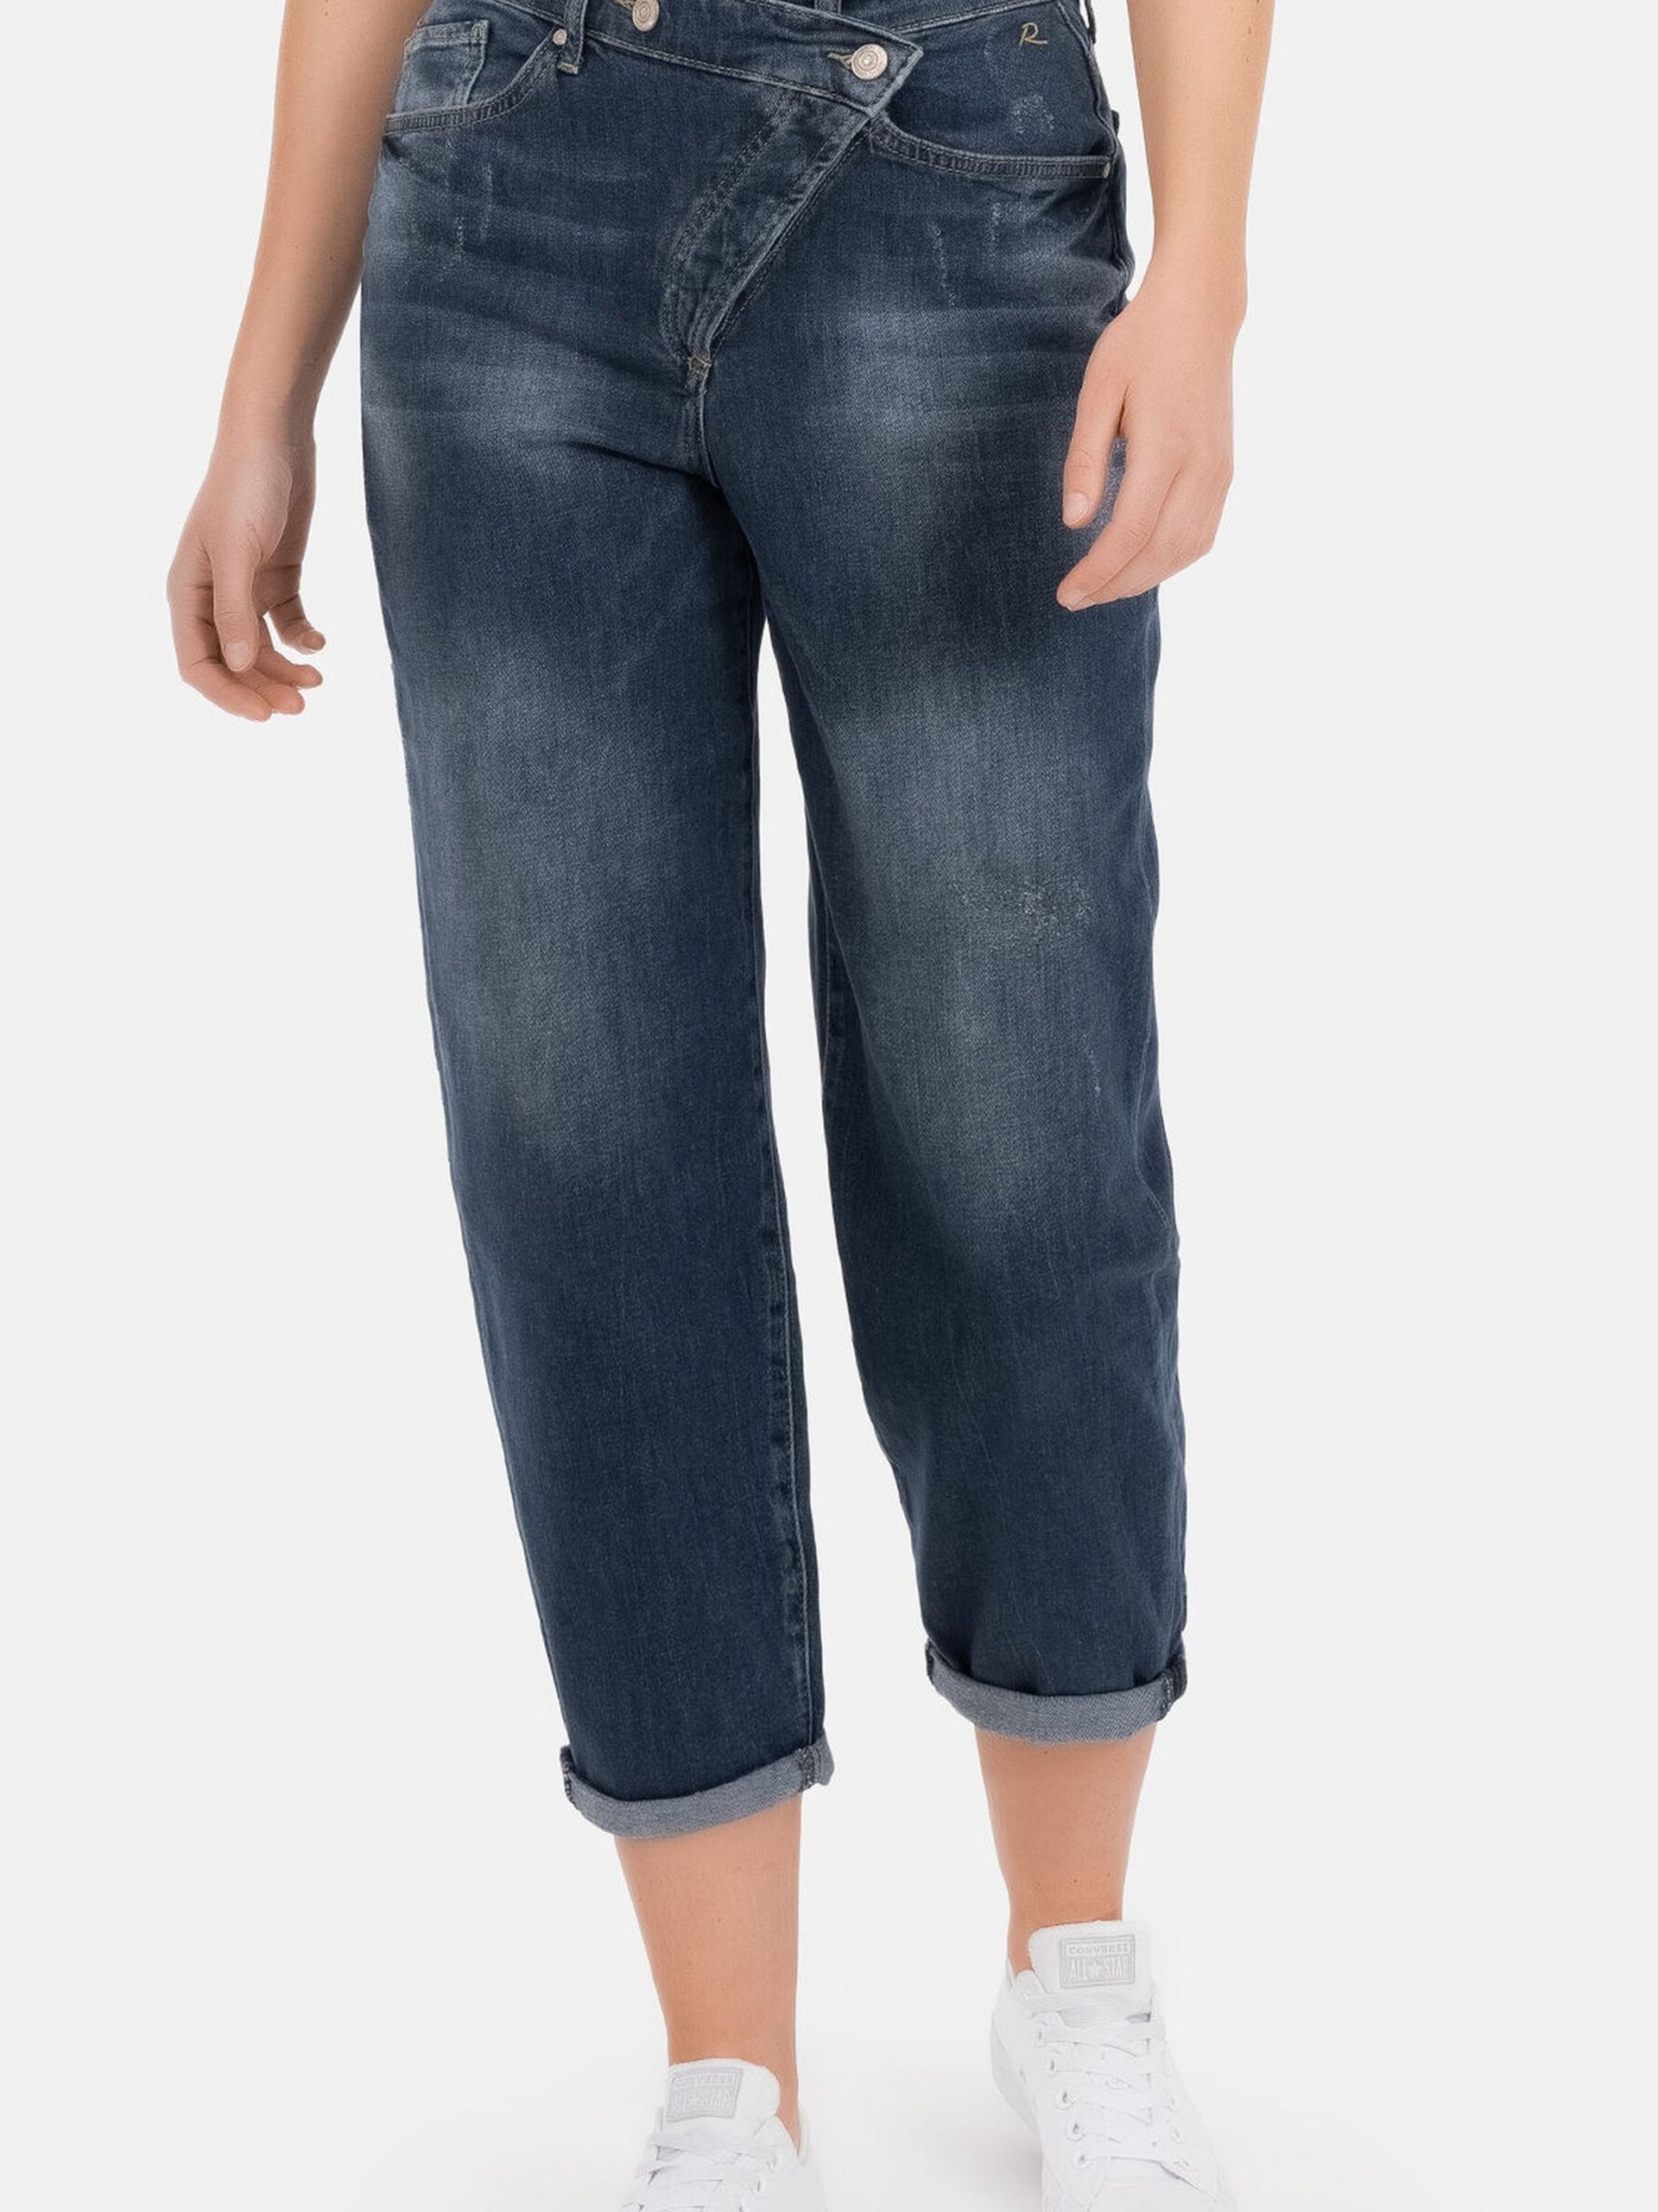 RECOVER pants Damen 7/8-Jeans - Gianna online kaufen